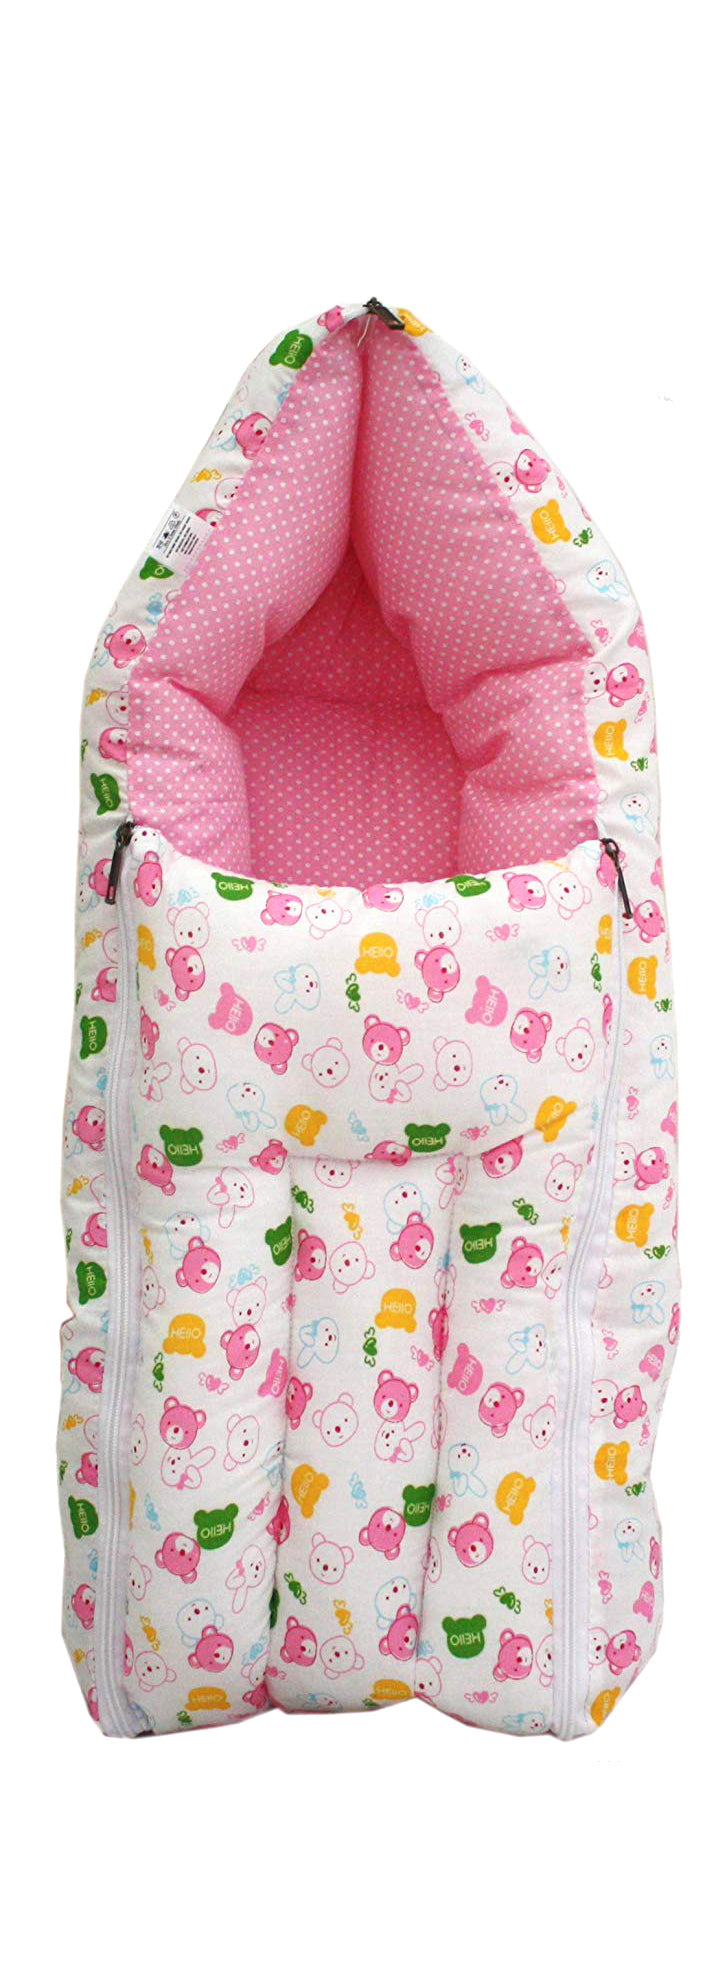 BestP Baby Sleeping Bag (White & Blush) - BestP : Best Product at Best Price